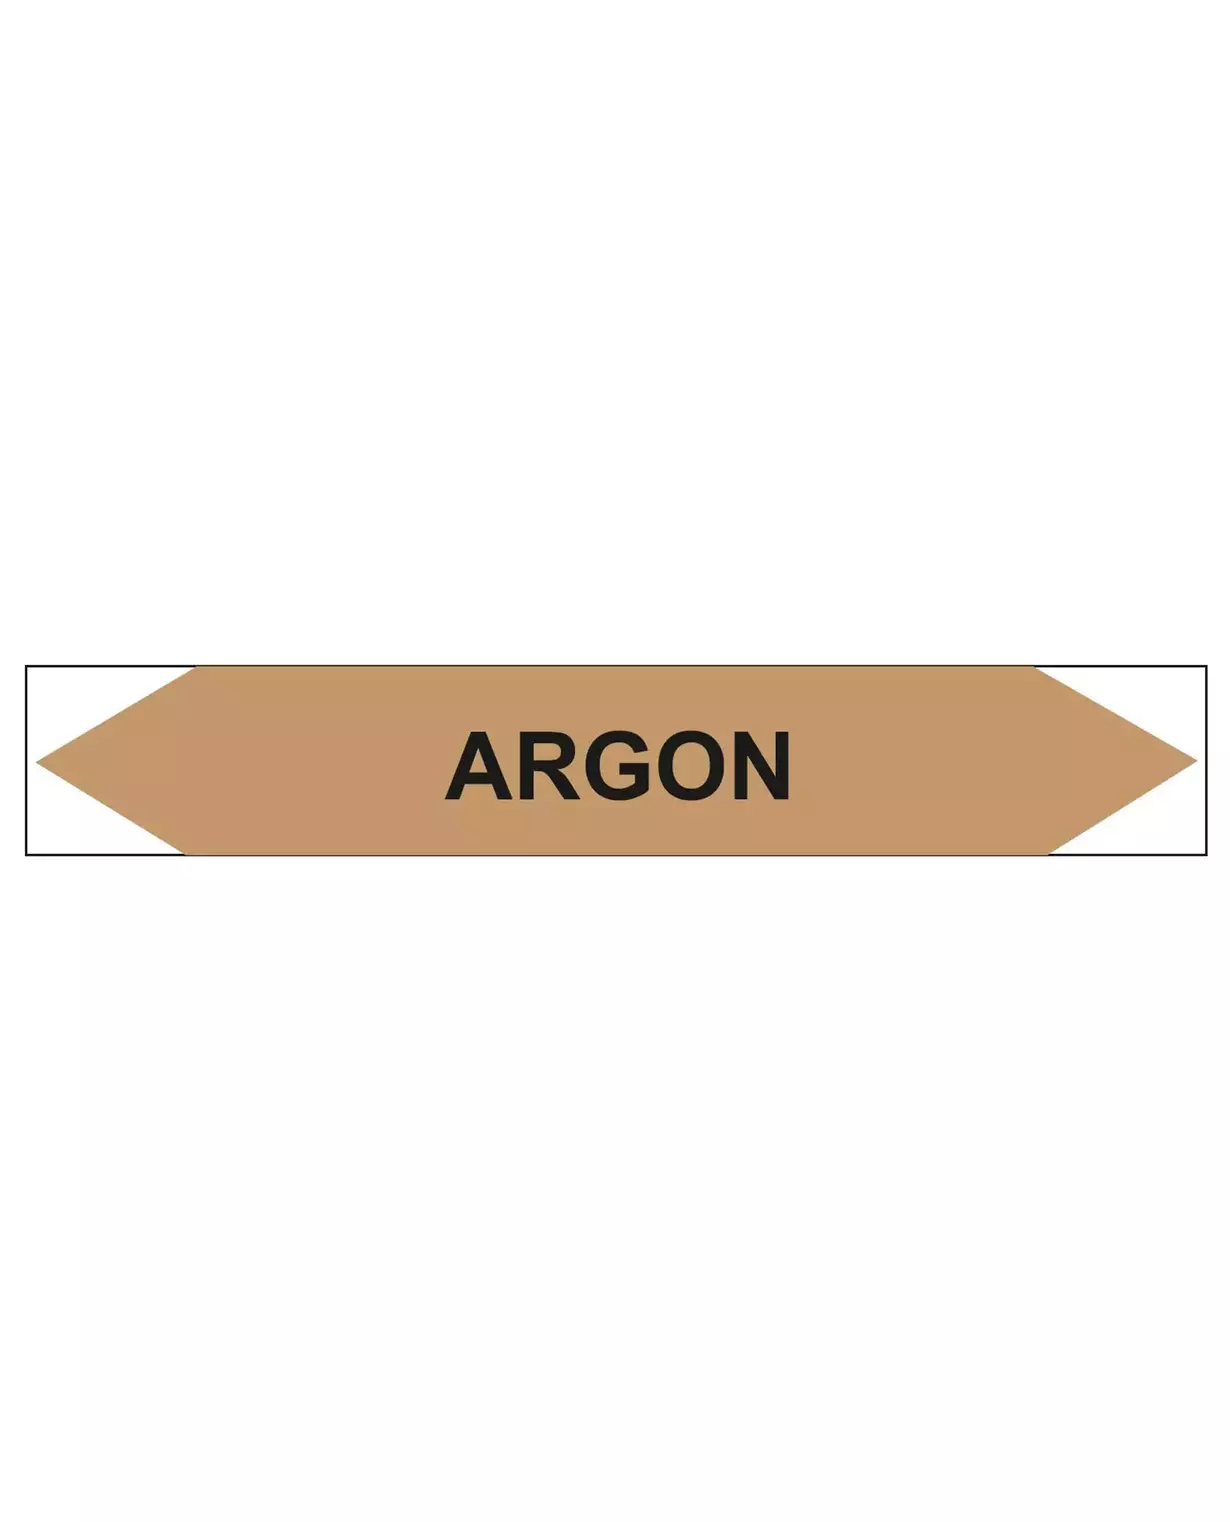 Argon, 160x25 mm